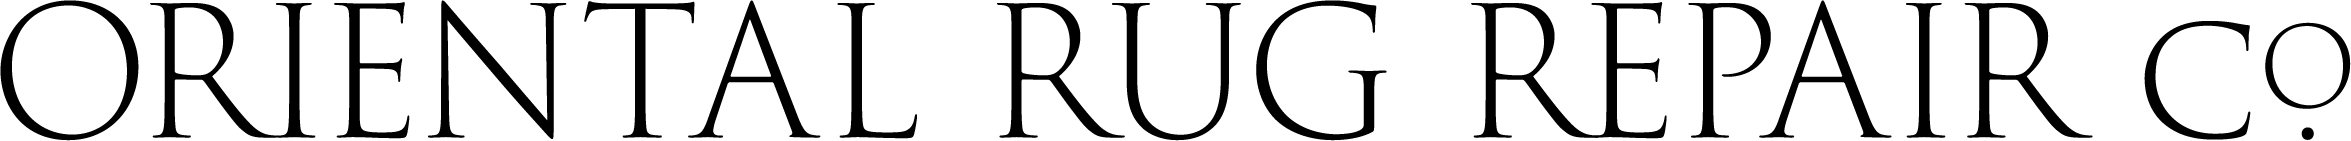 Oriental Rug Repair Co logo